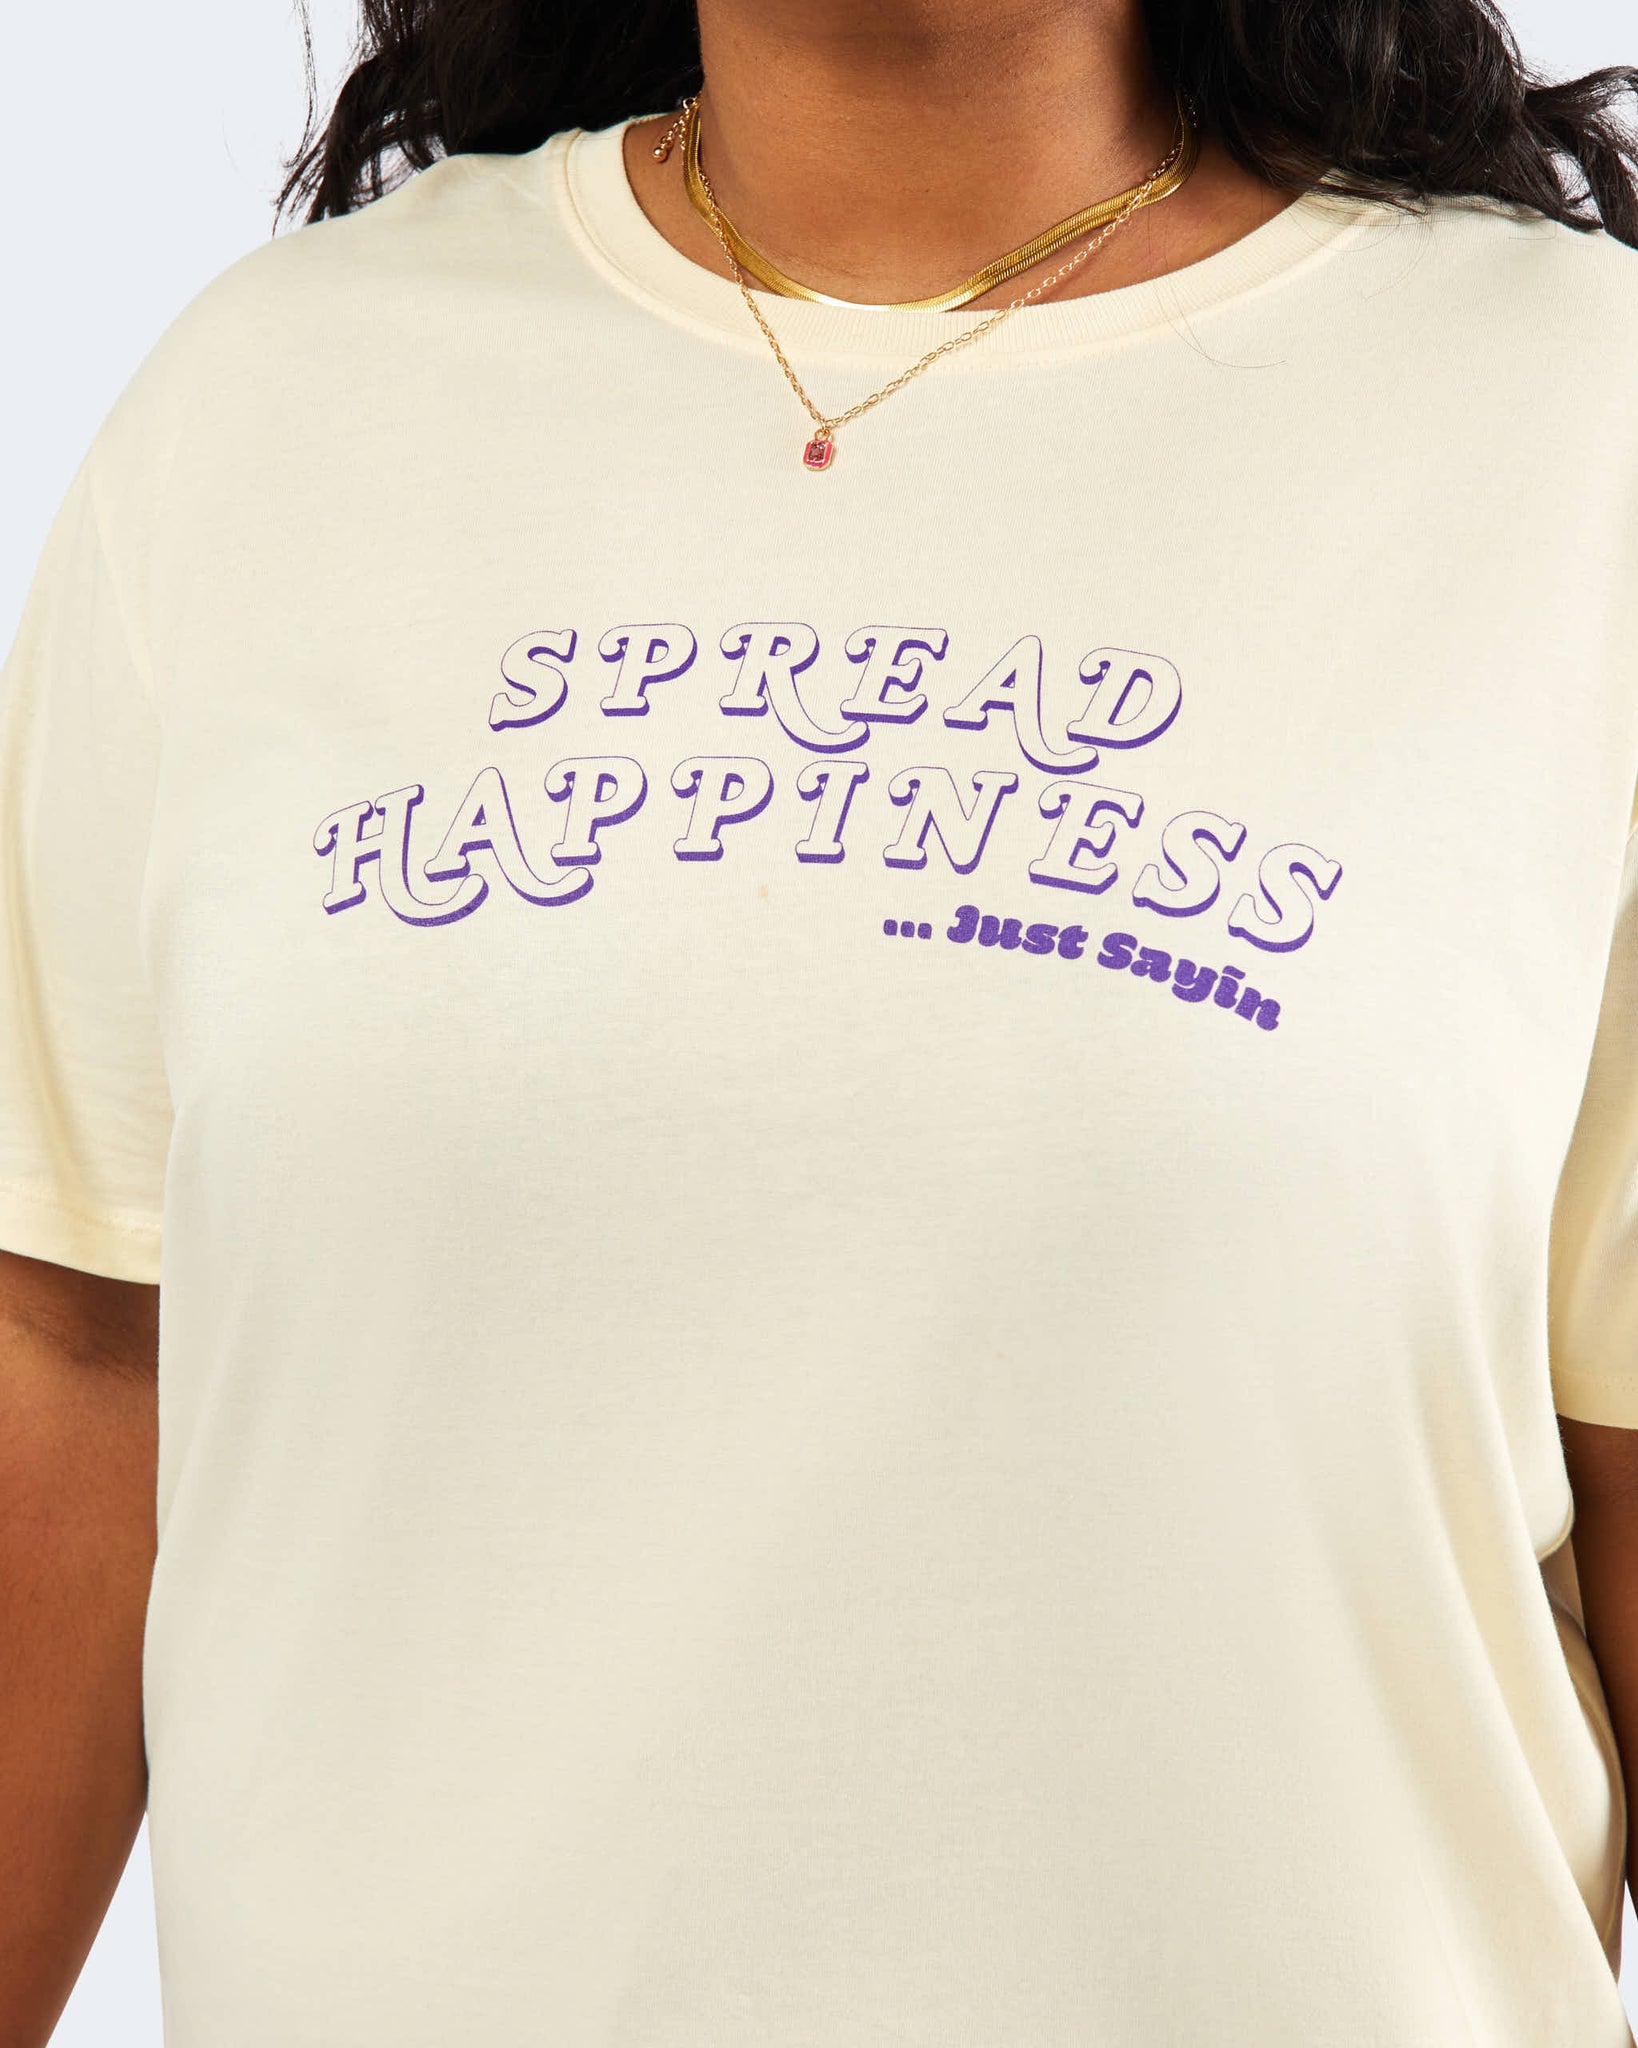 Spread Happiness Tee - Purple